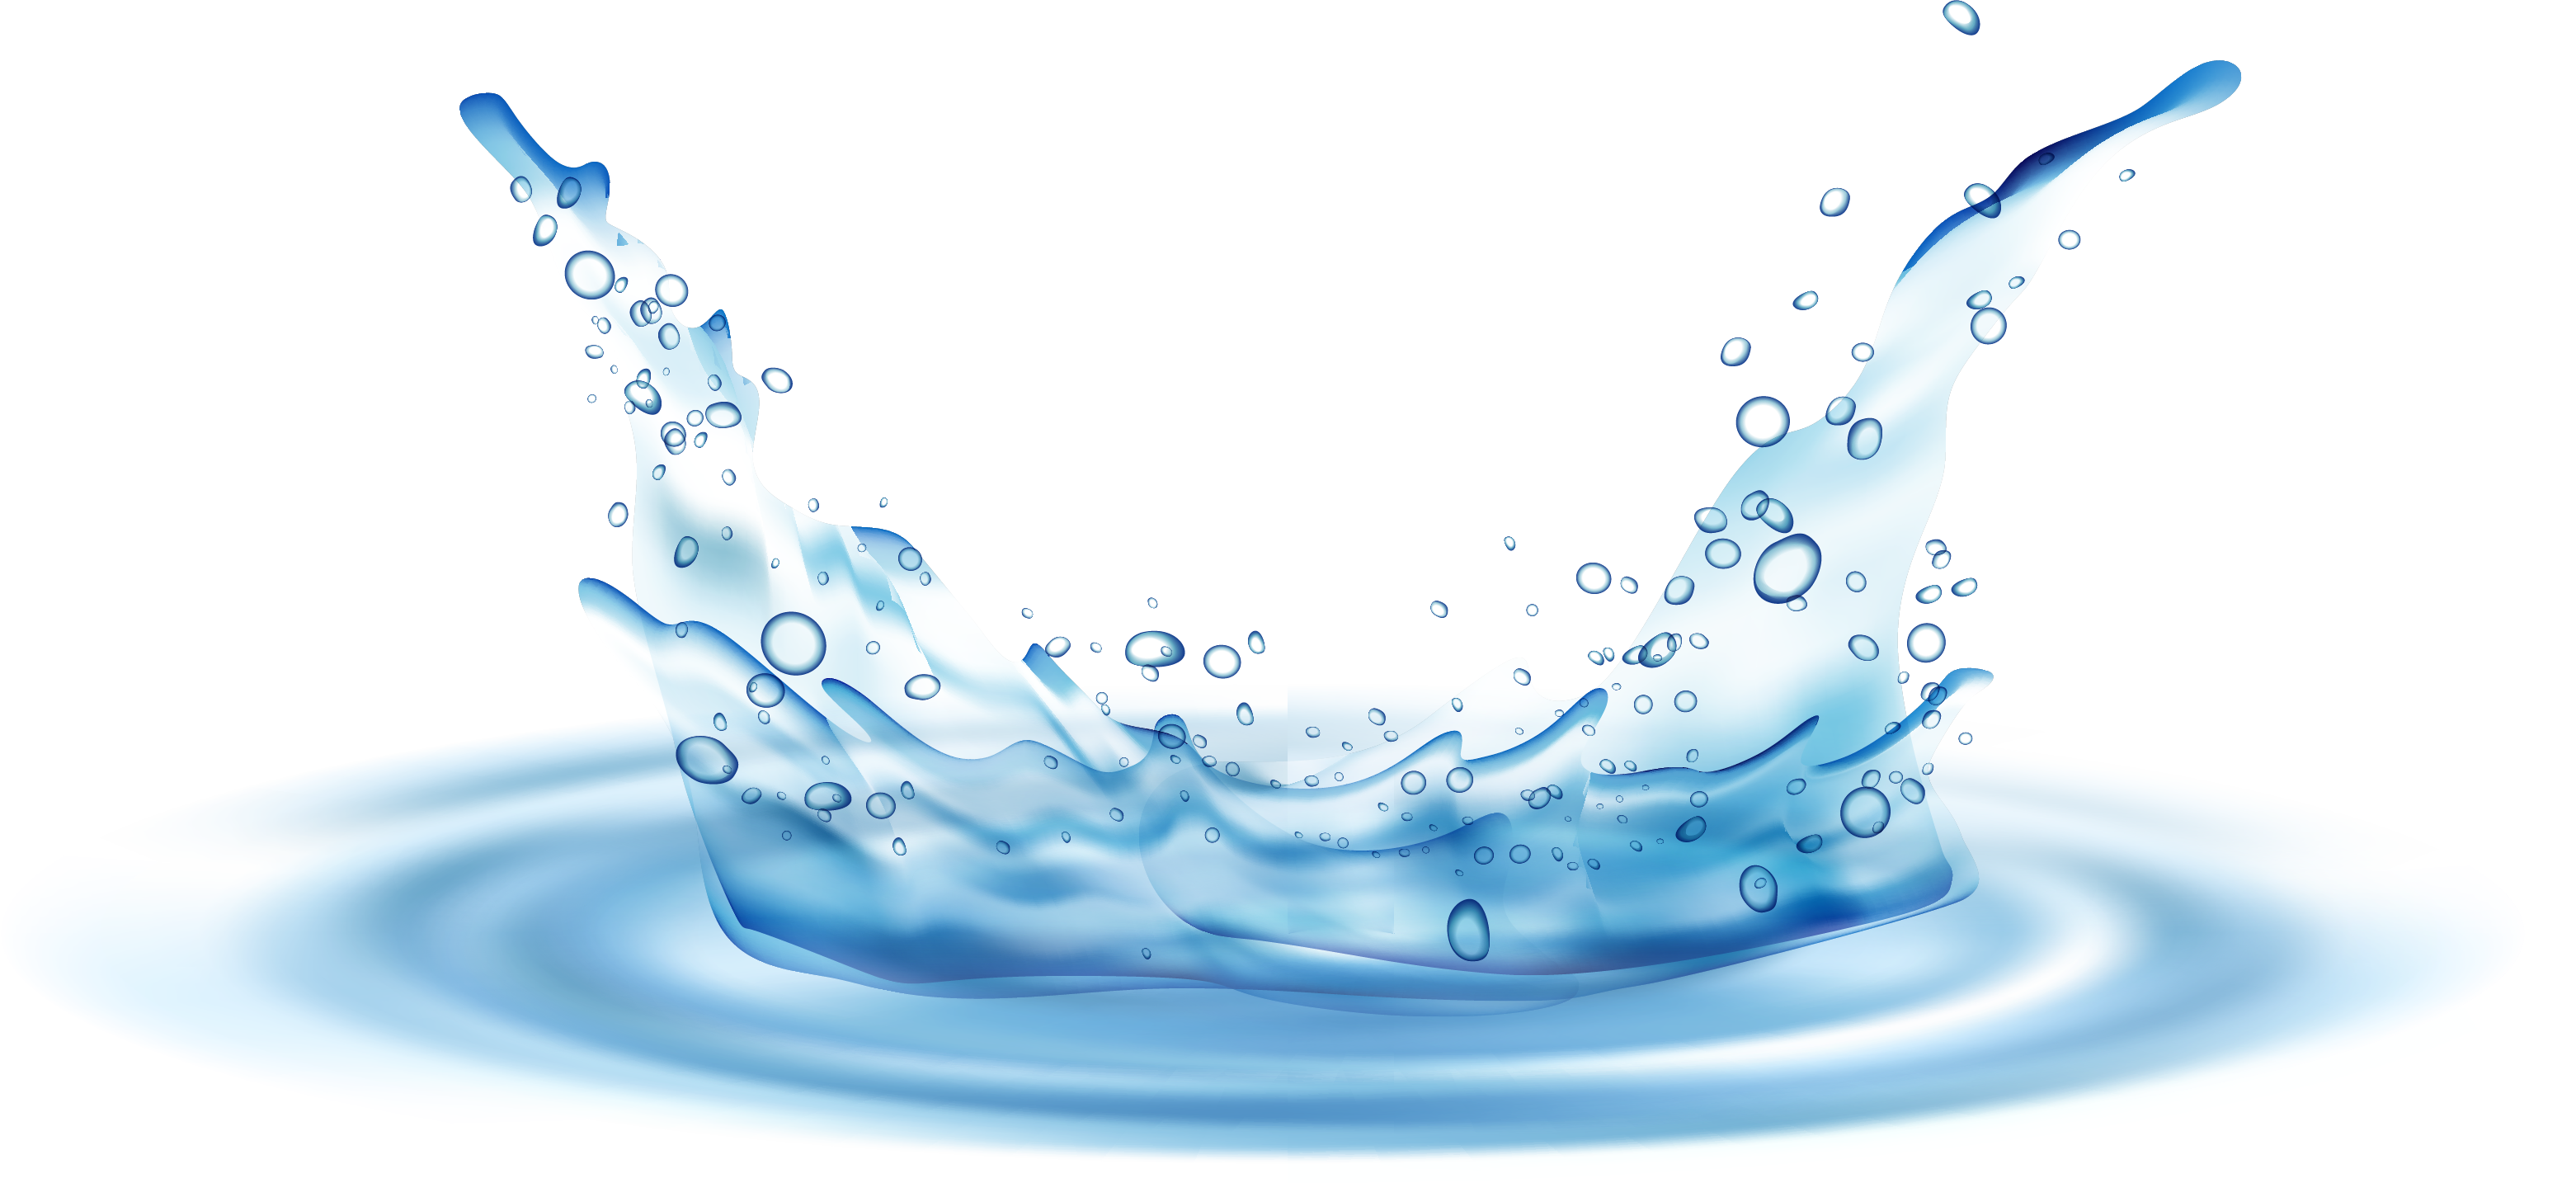 Blue Splash Water PNG Download Image